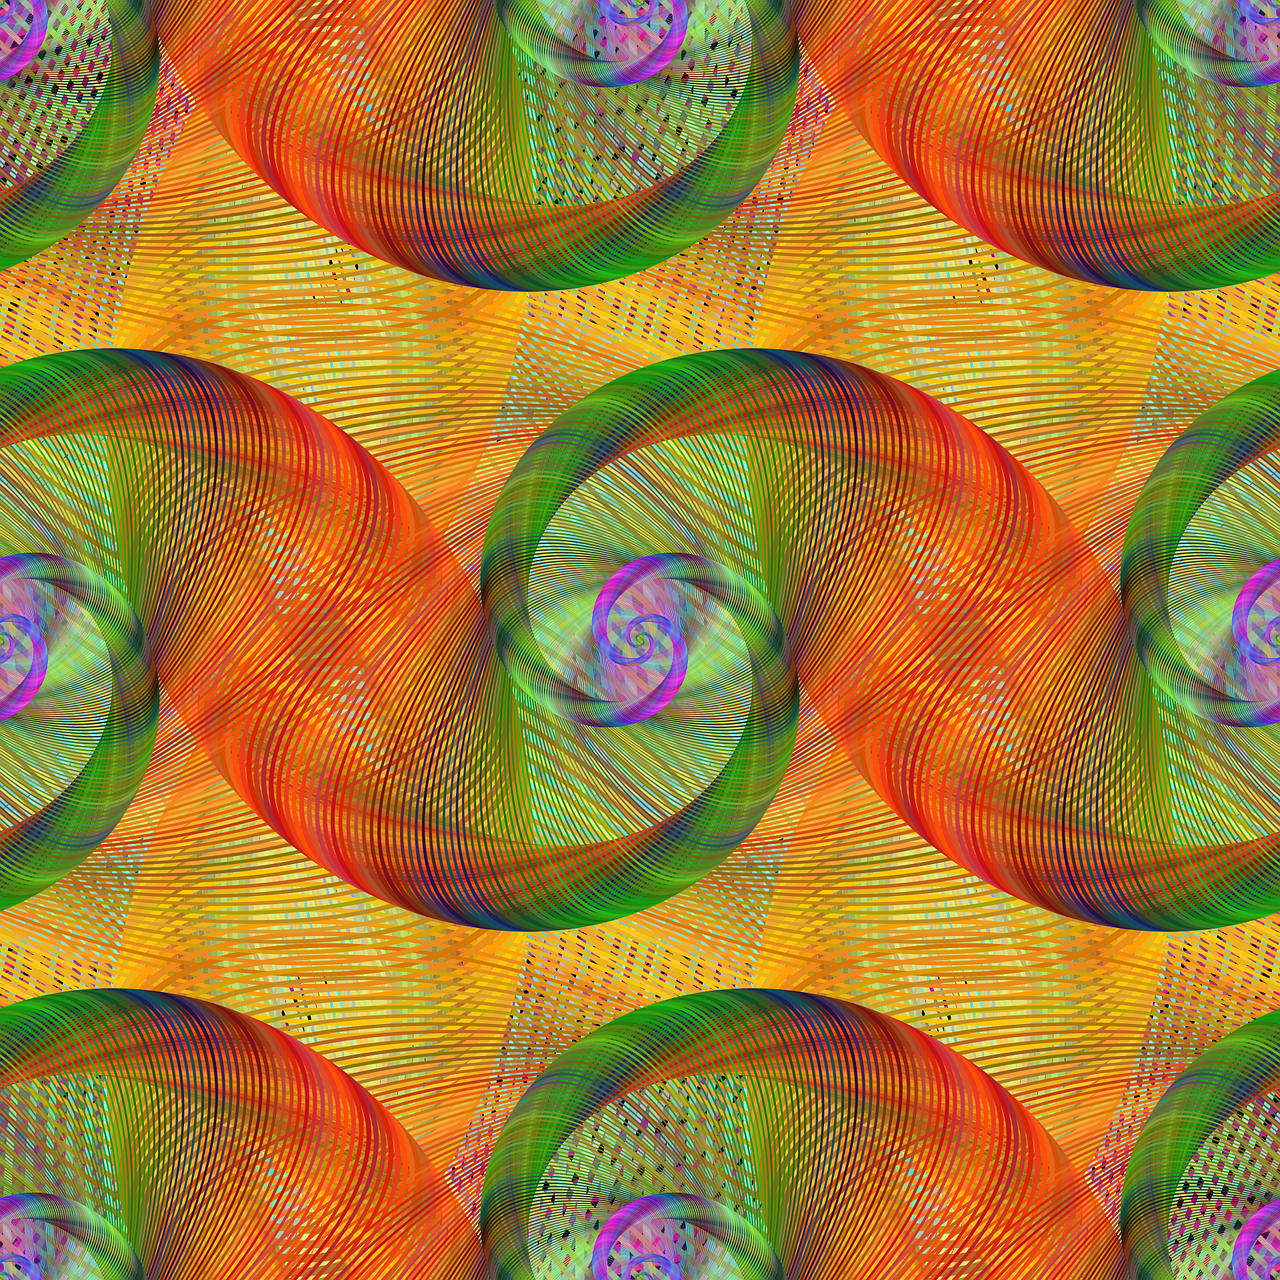 fractal patter showing confluance